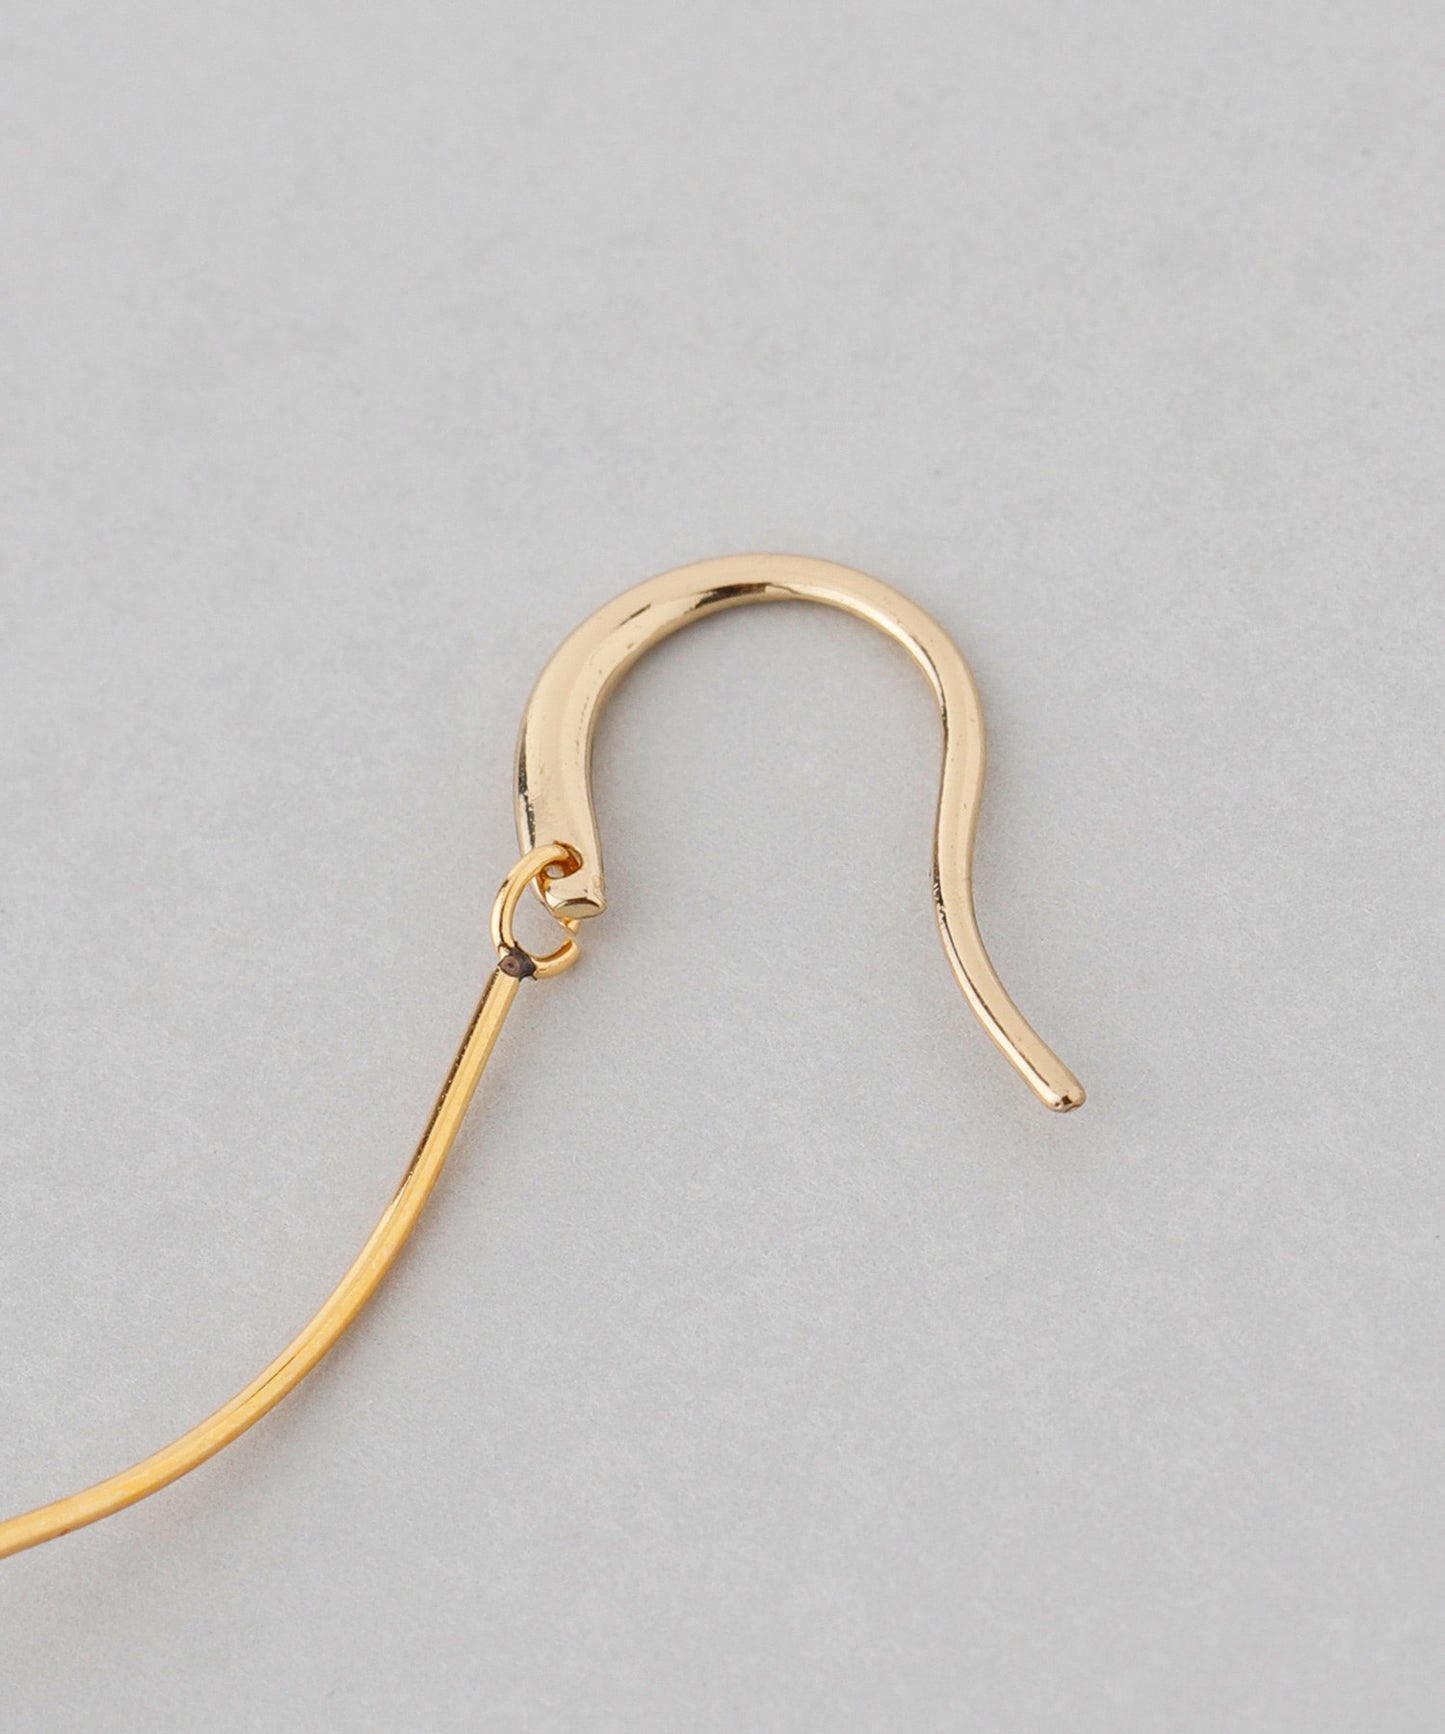 Pearl × Wavy line Asymmetrical Earrings [C][UMU][Sheerchic]